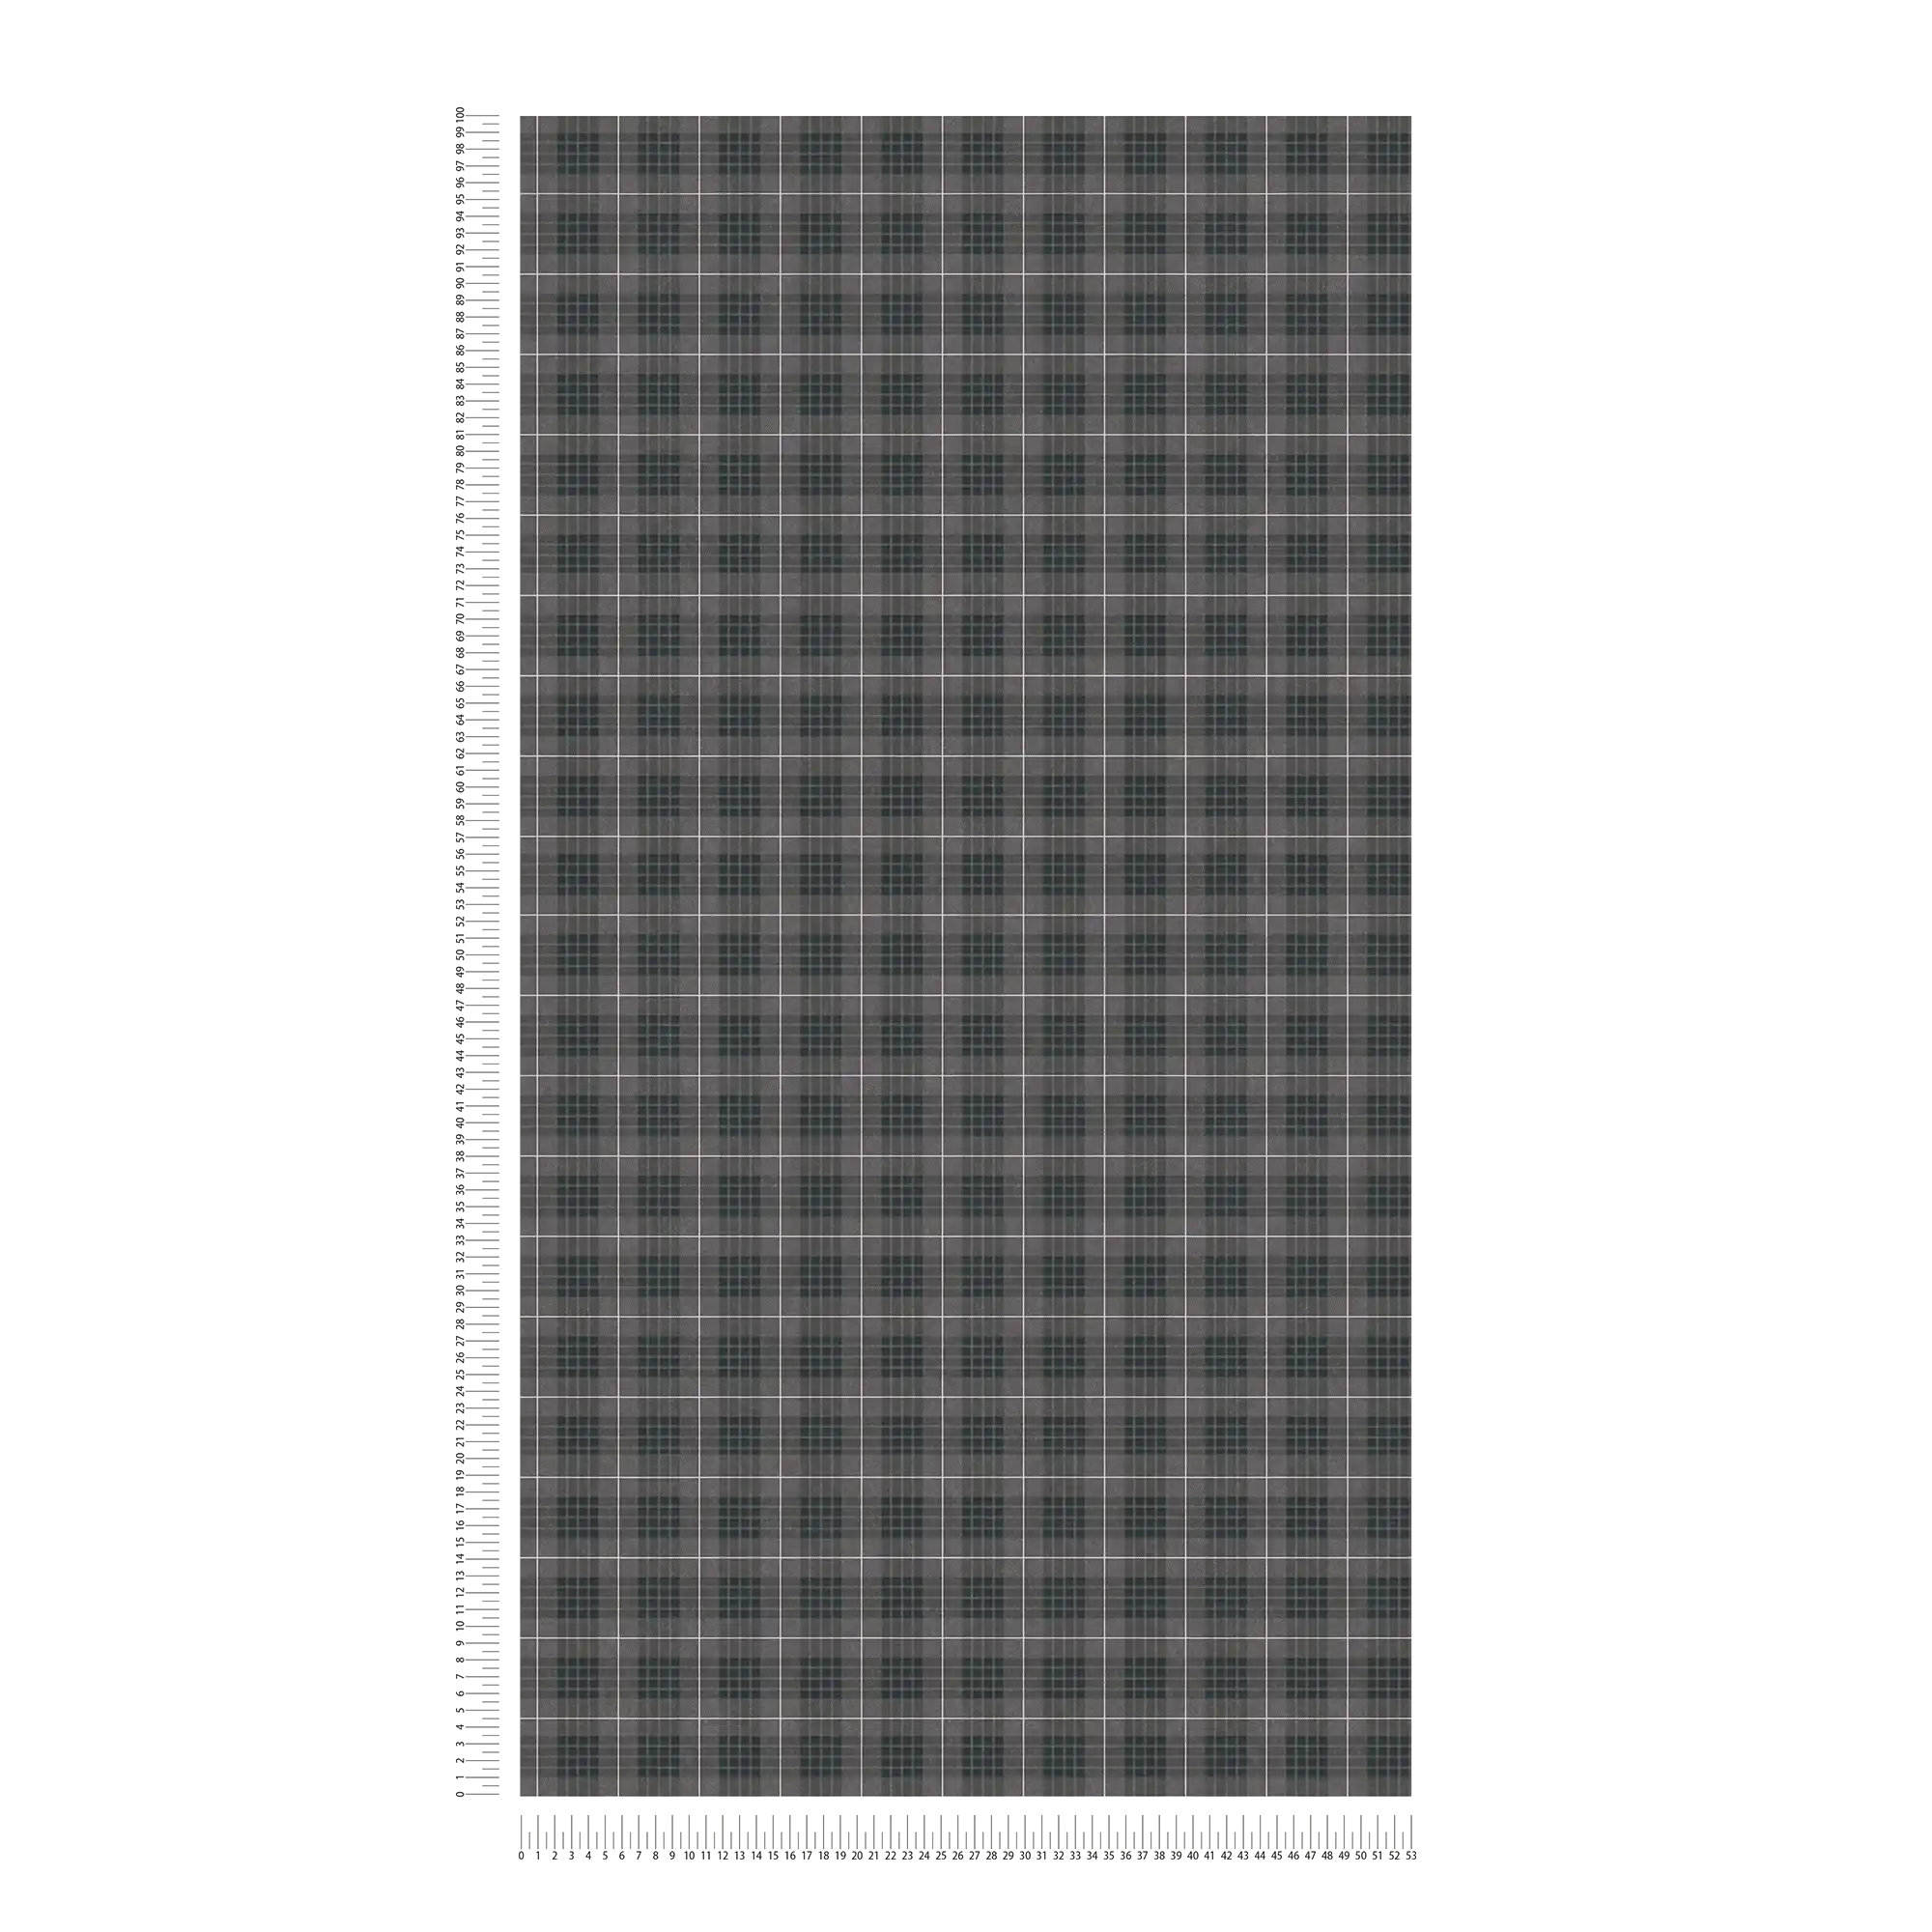             Plaid tartan fabric wallpaper - grey, white
        